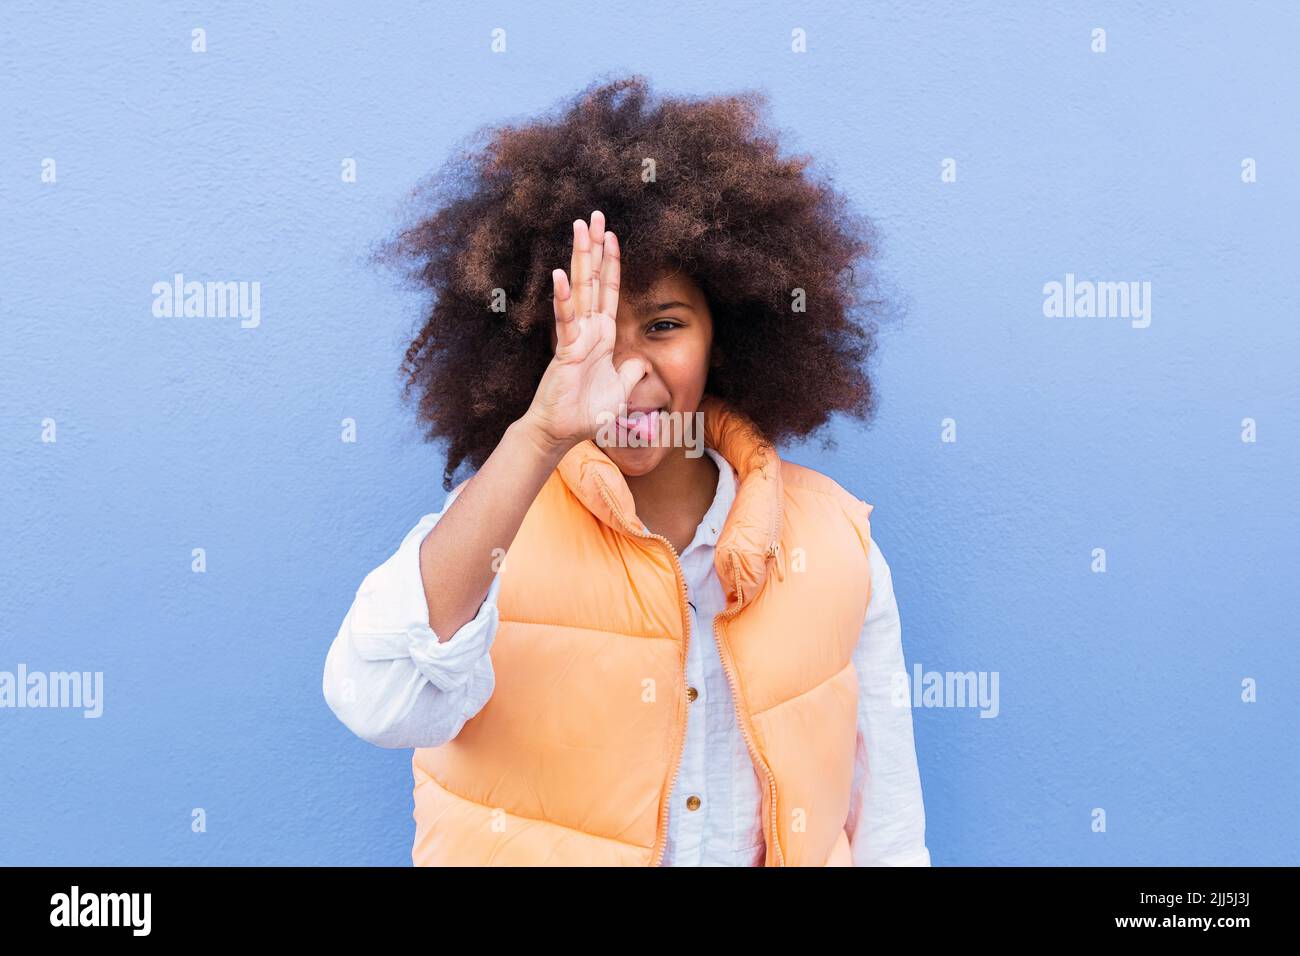 Chica con peinado afro haciendo cara divertida contra fondo azul Foto de stock